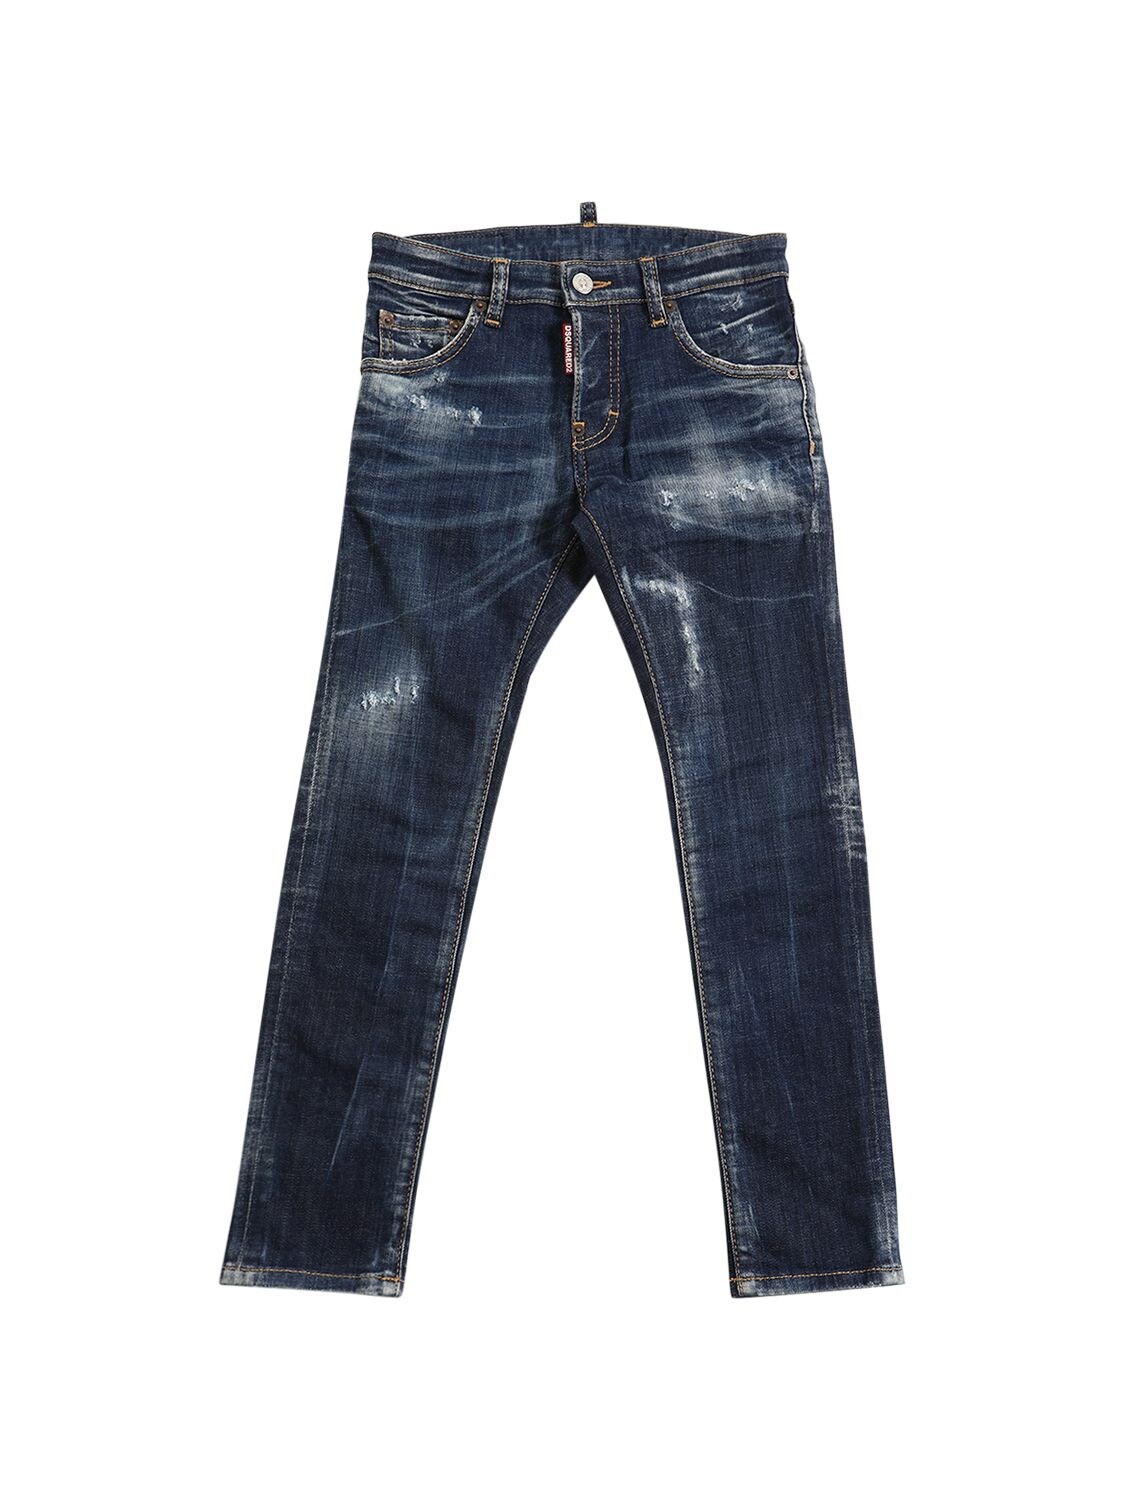 Cotton Denim Faded Jeans